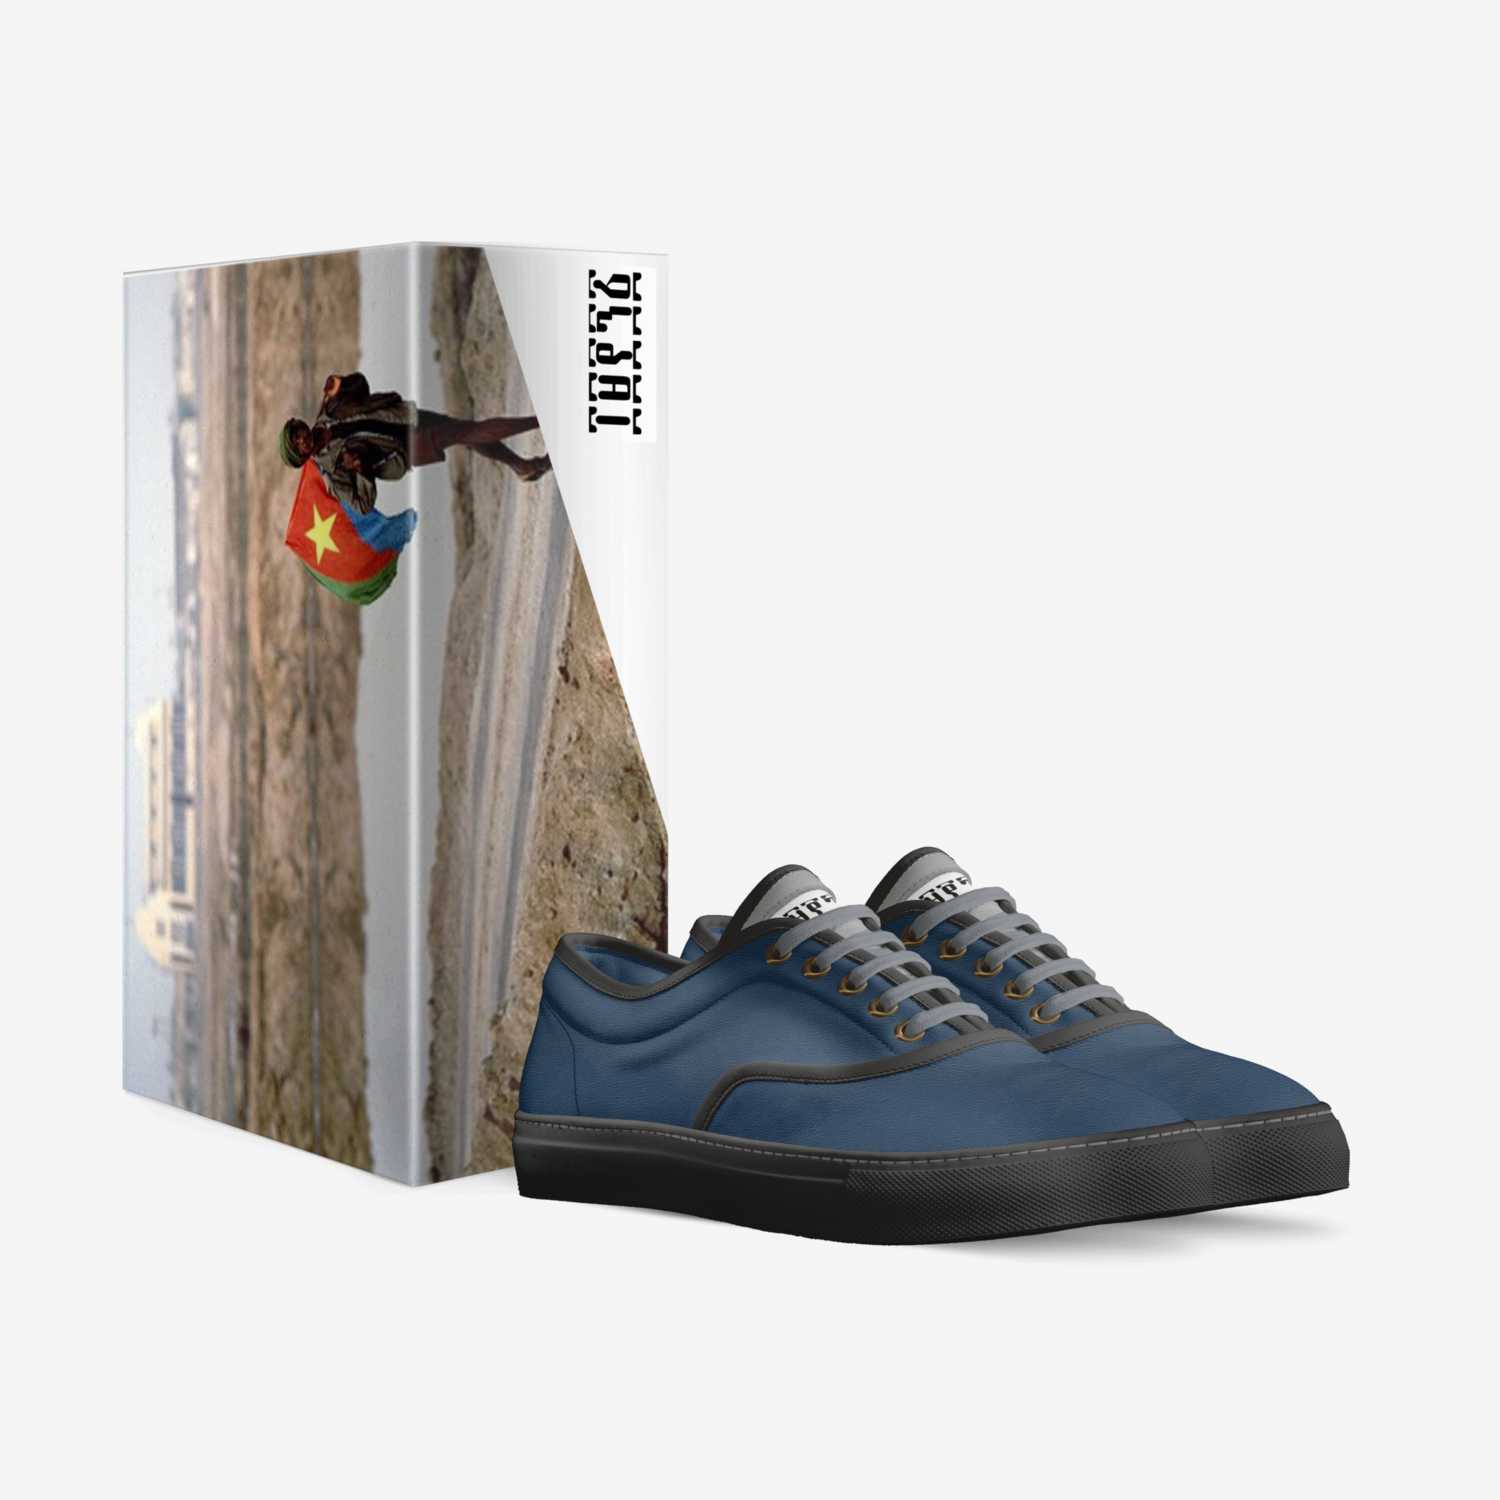 ahaZ custom made in Italy shoes by Robel Yemane | Box view